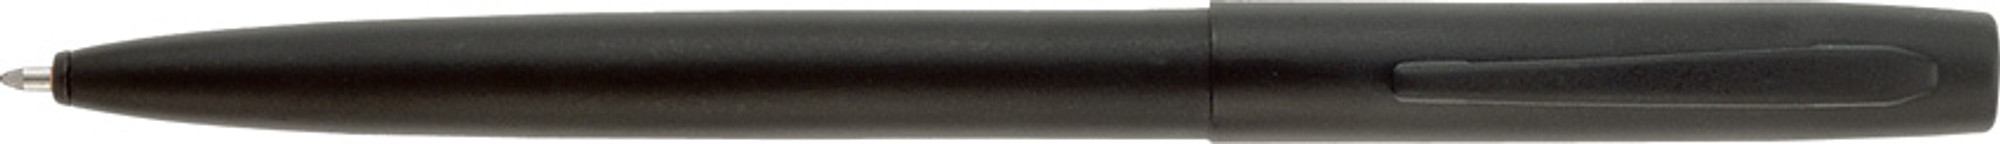 Fisher Space Pen M4 Cap-O-Matic Military Black Body w/Black Clip